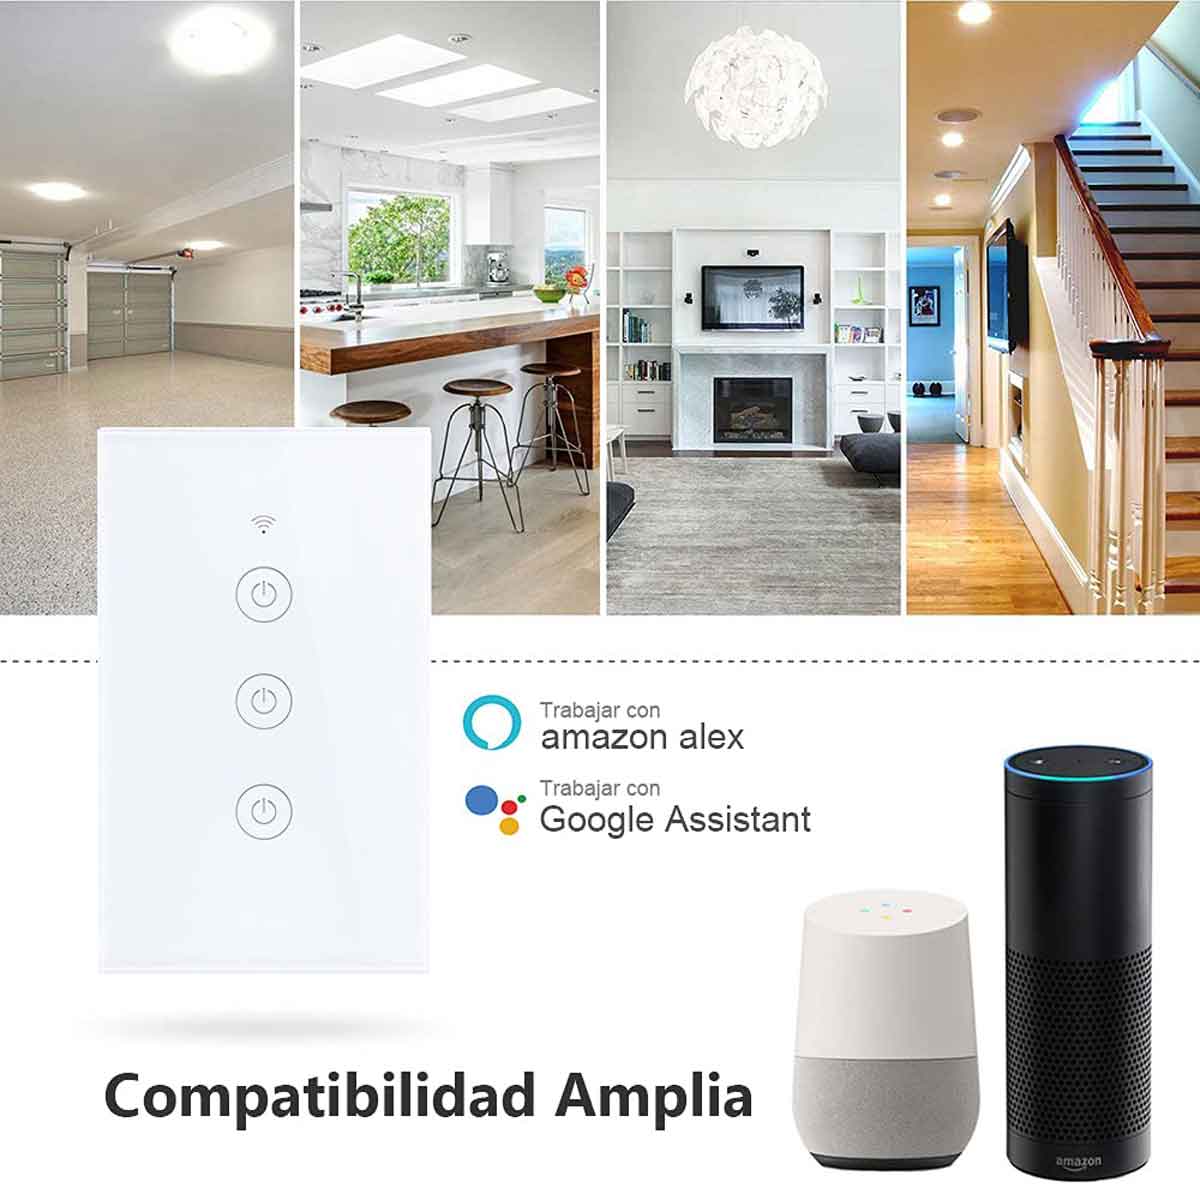 compatible con amazon alexa google assistant google home